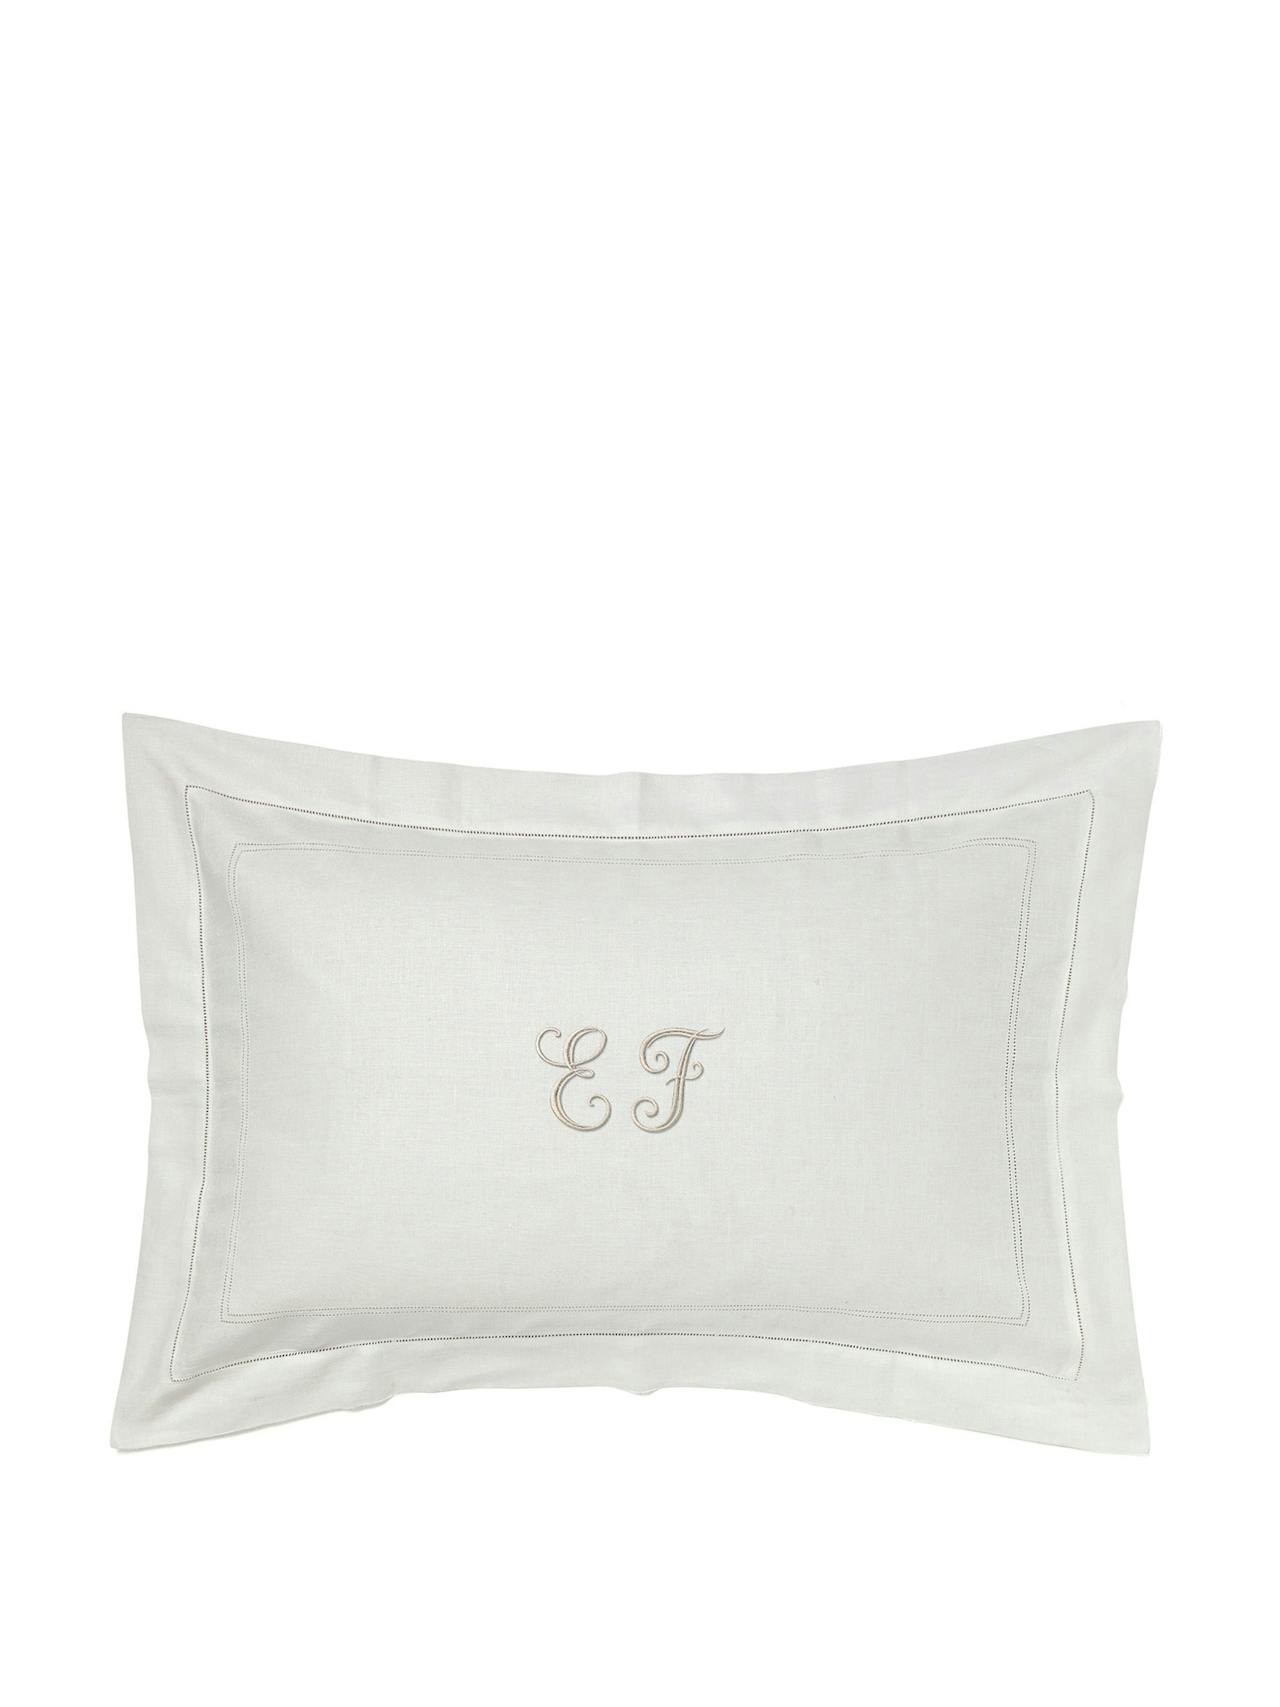 Ivory white hemstitch pillowcase